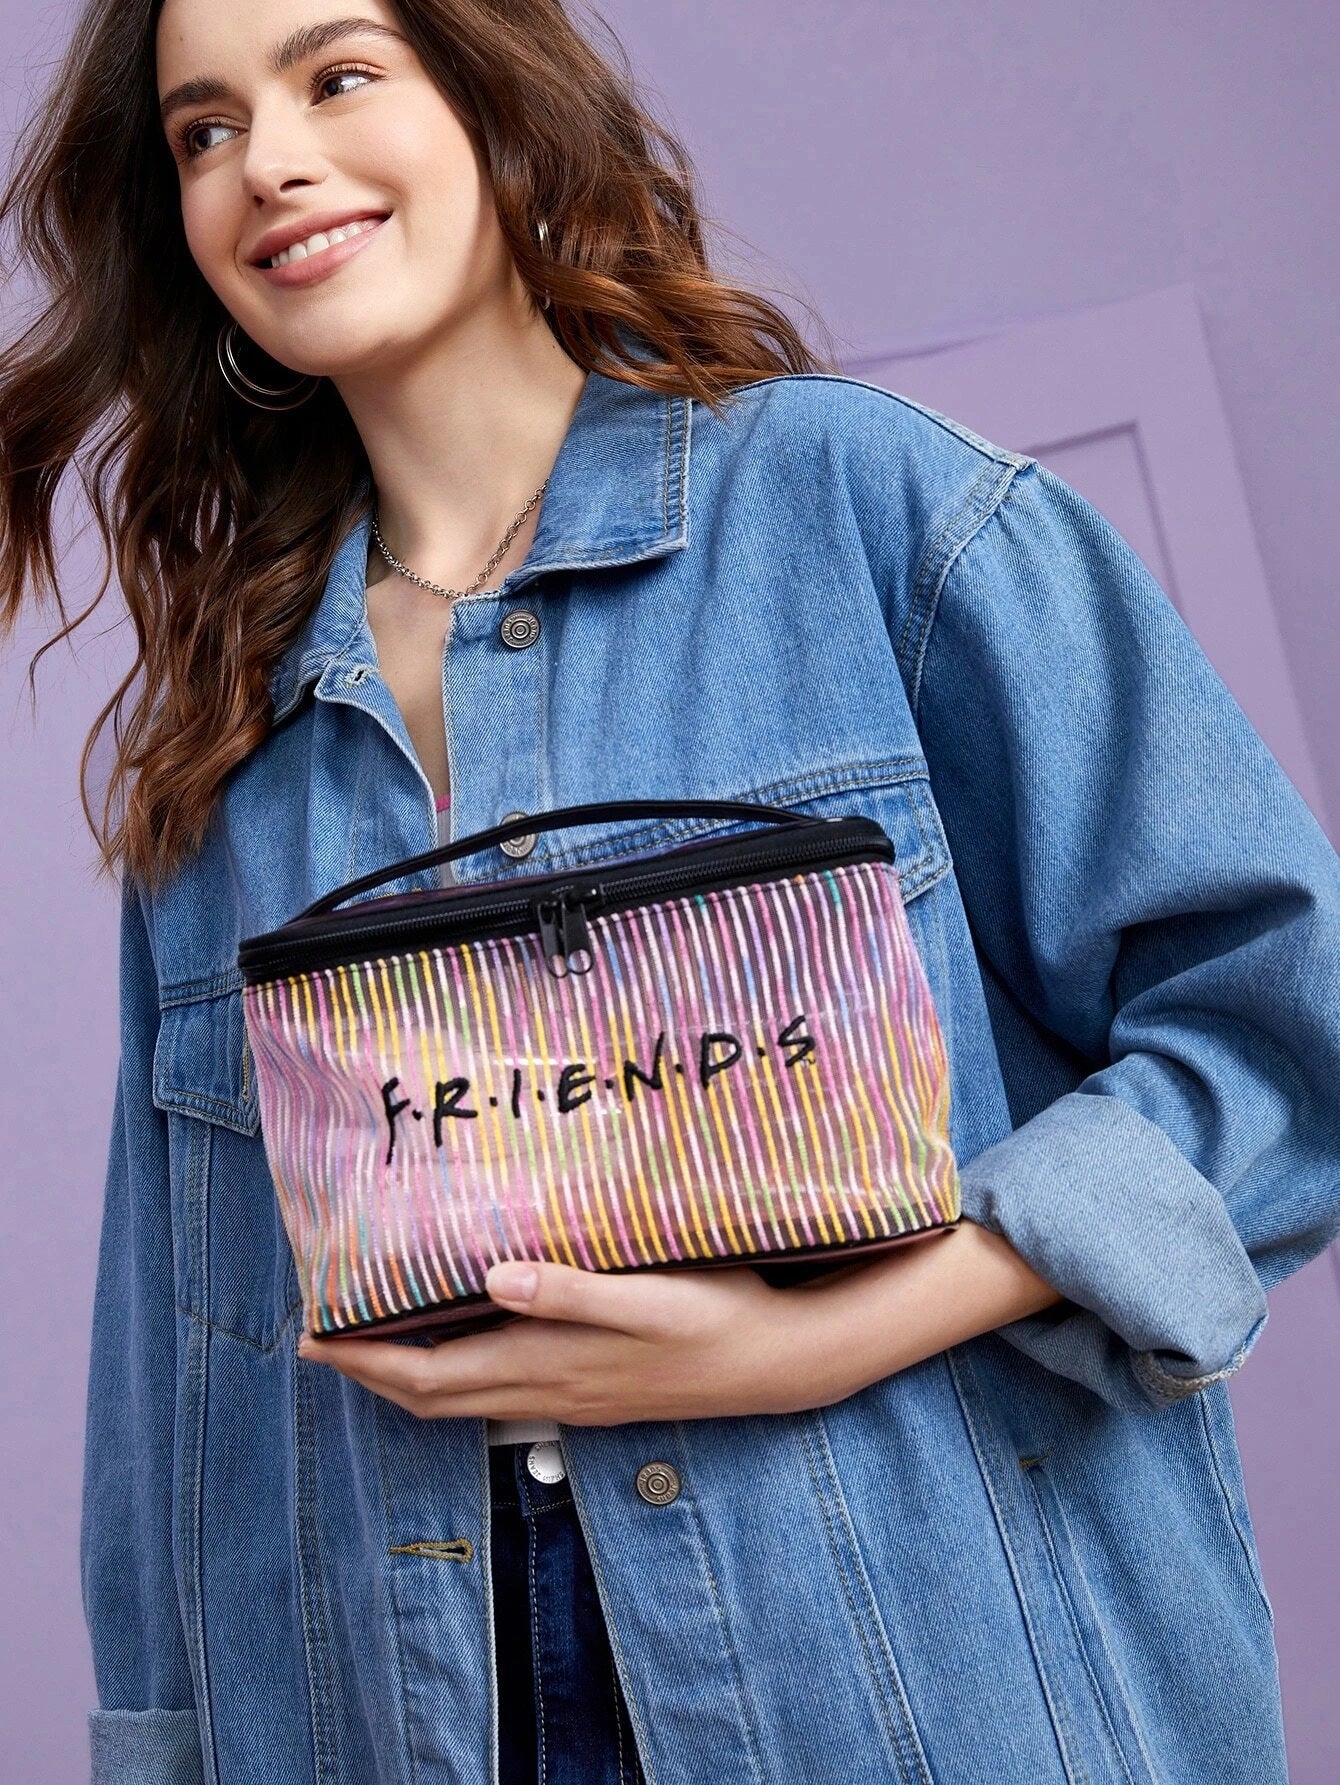 Friends Cosmetic Bag